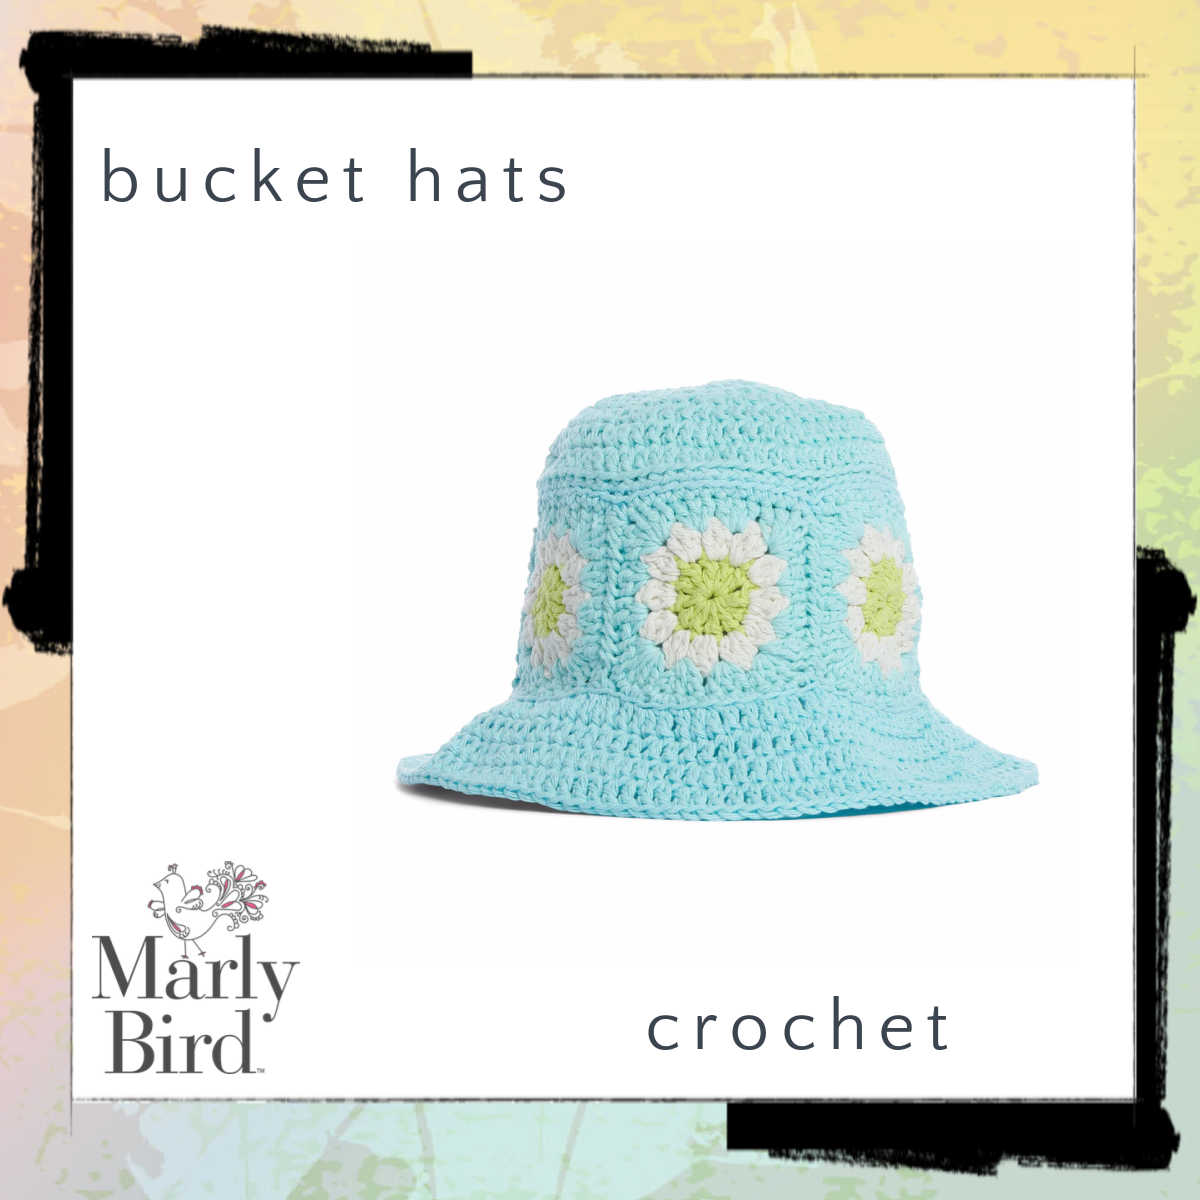 Crochet bucket hat patterns - Marly Bird